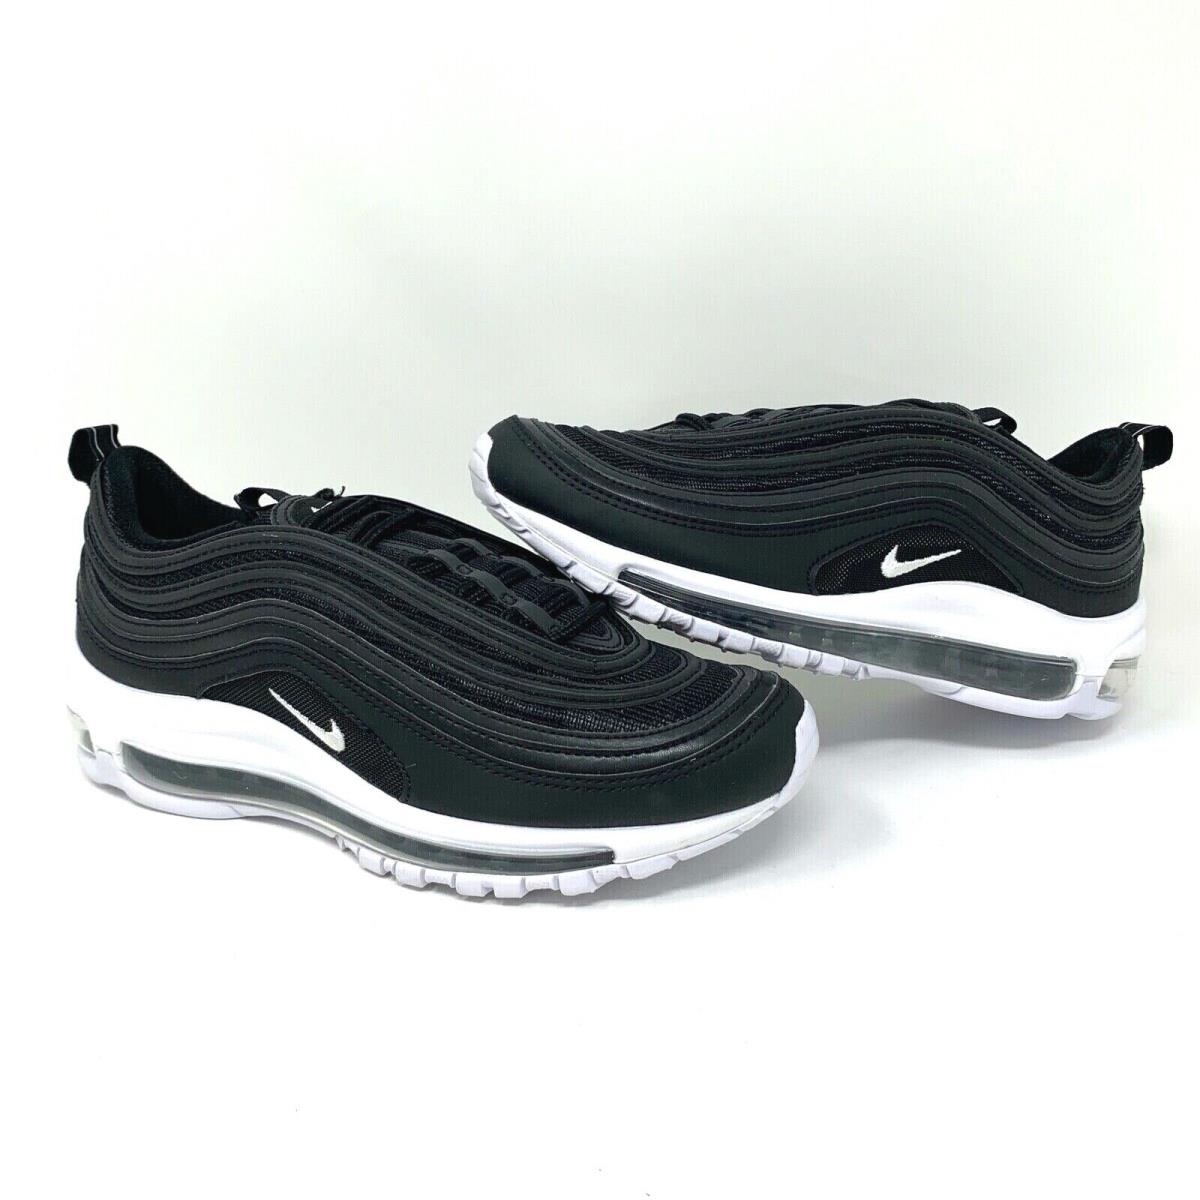 Nike Air Max 97 Black/white Sneakers 921826-001 - Men`s Size 6.5